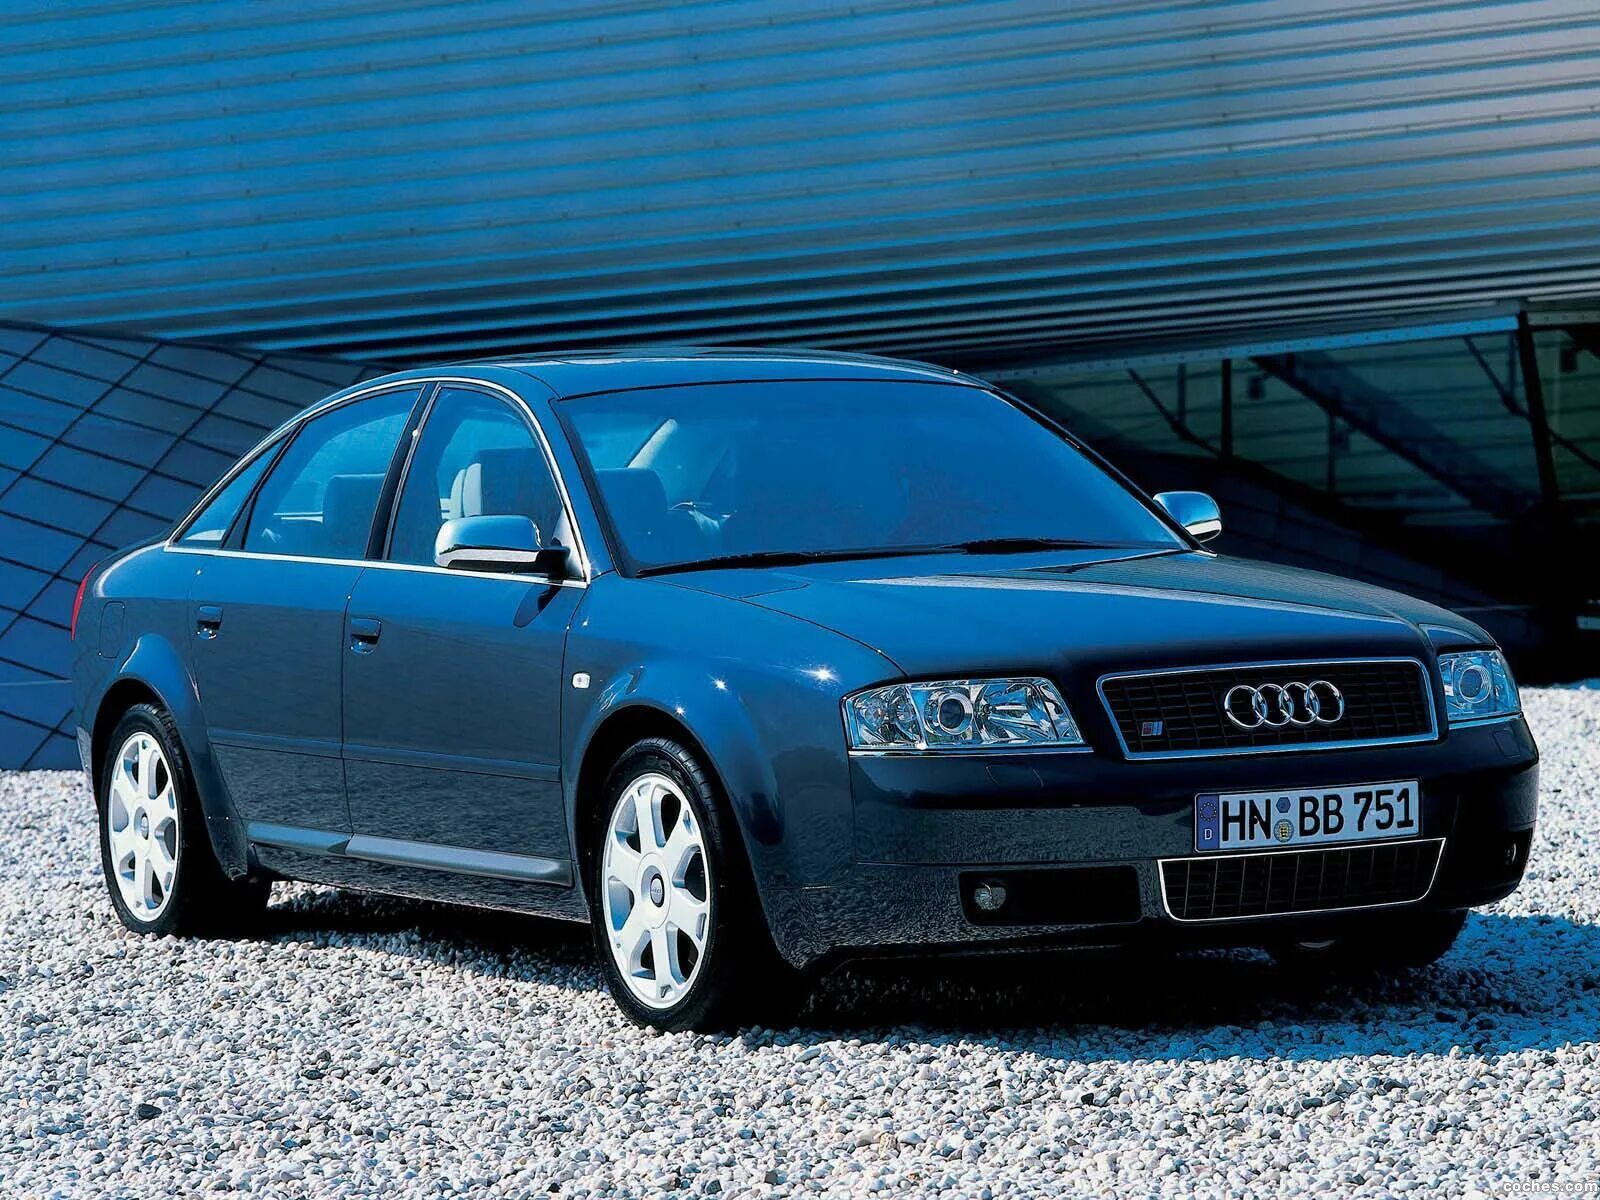 Ауди 6 2000 годов. Audi a6 c5 1999. Audi a6 c5 2004. Audi s6 c5. Ауди а6 c5 2000.